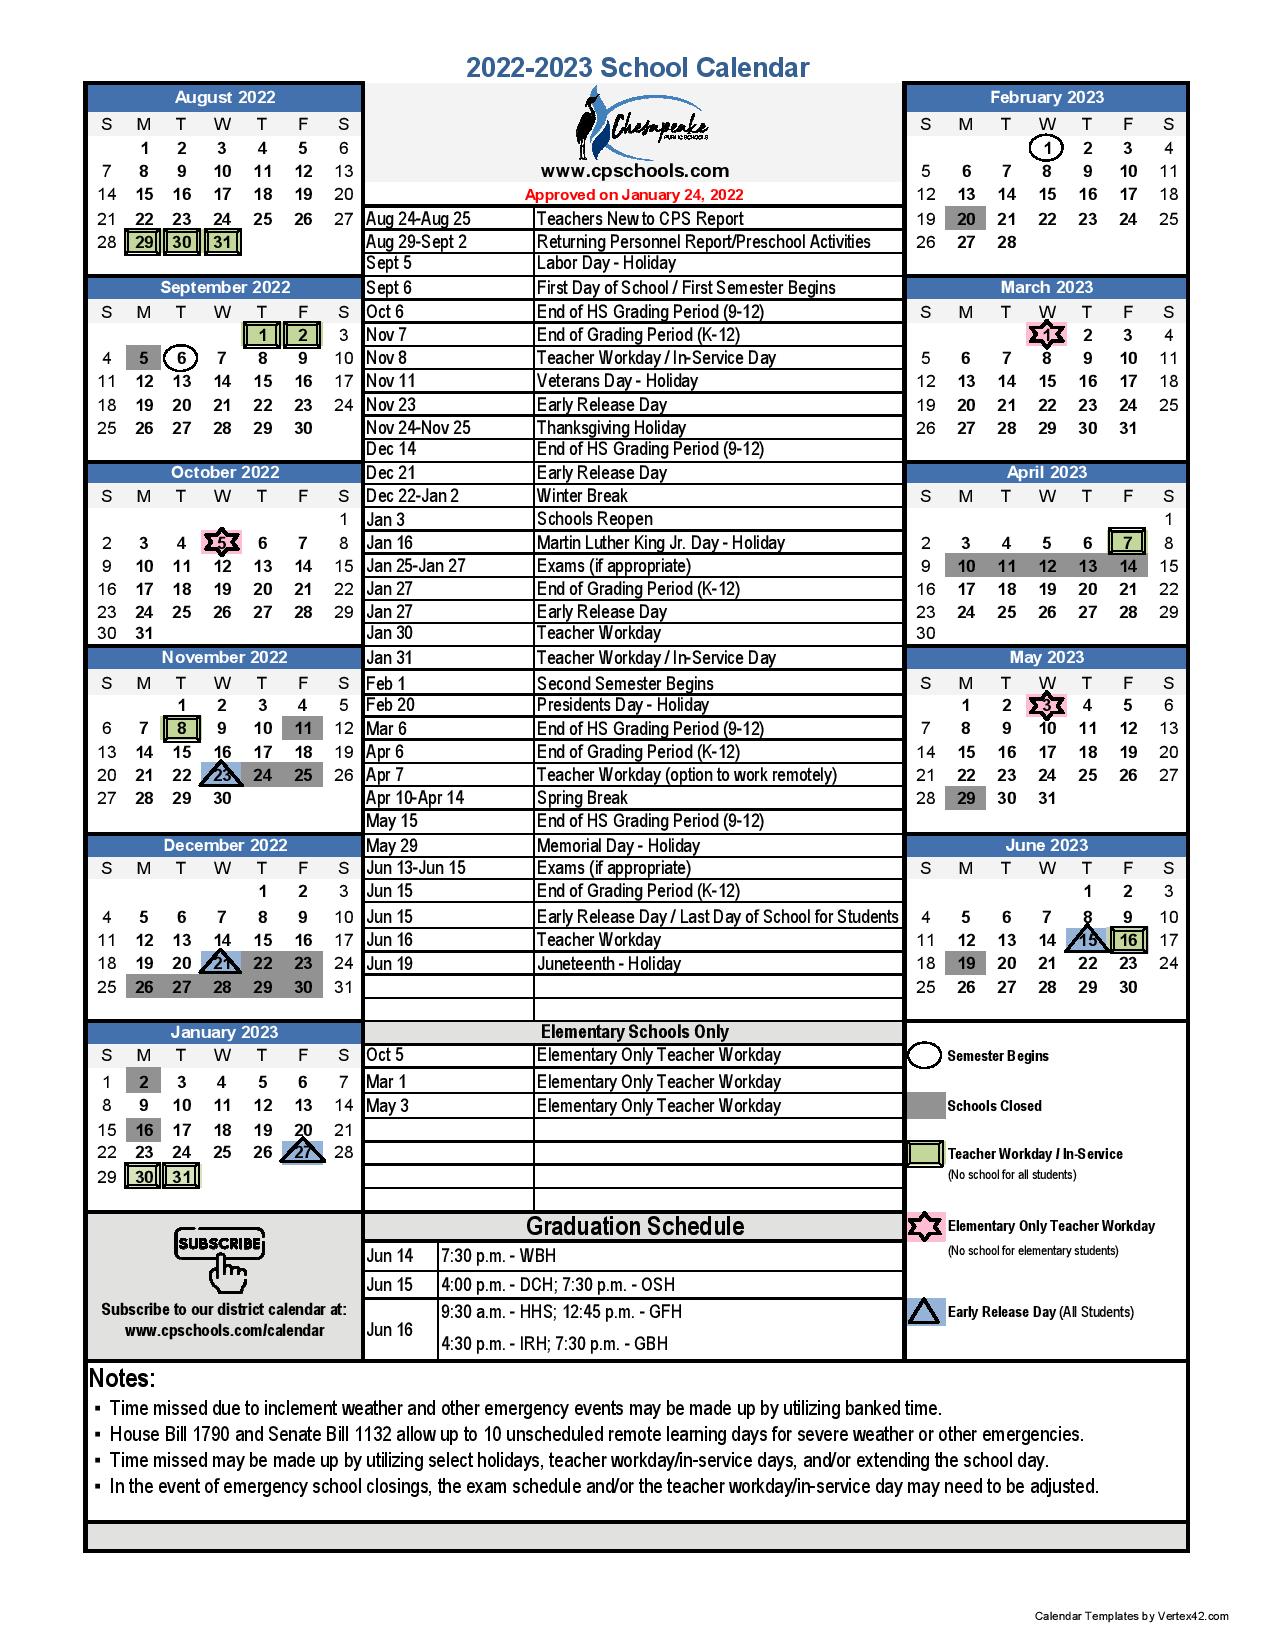 Chesapeake Public Schools Calendar 202223